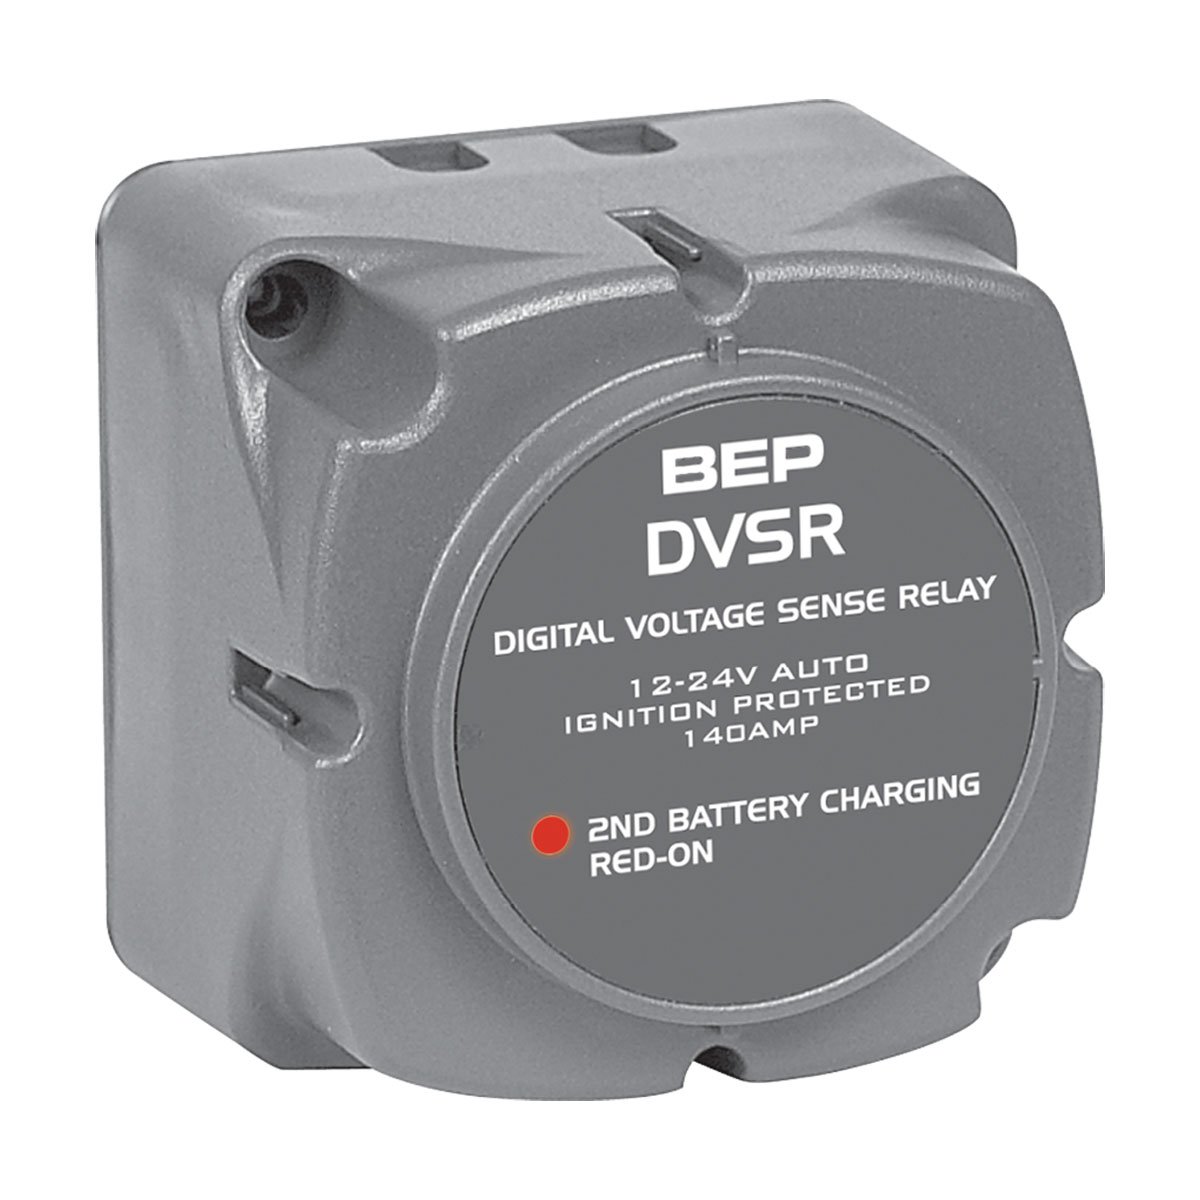 Bep Digital Voltage Sensing Relay Hobart Marine Company